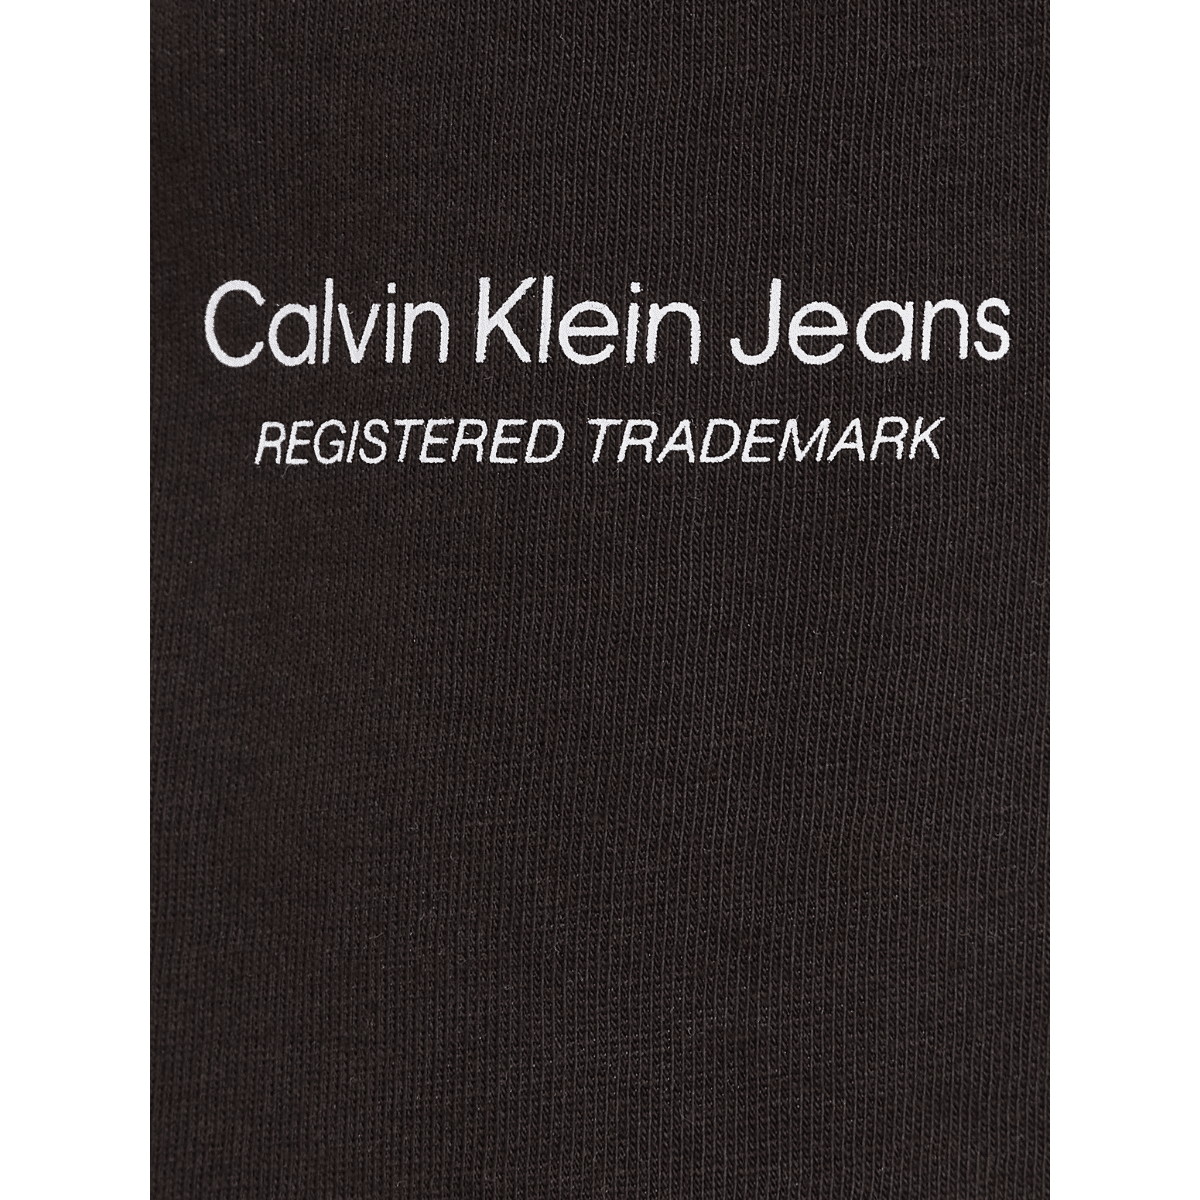 calvin klein jeans black tshirt logo